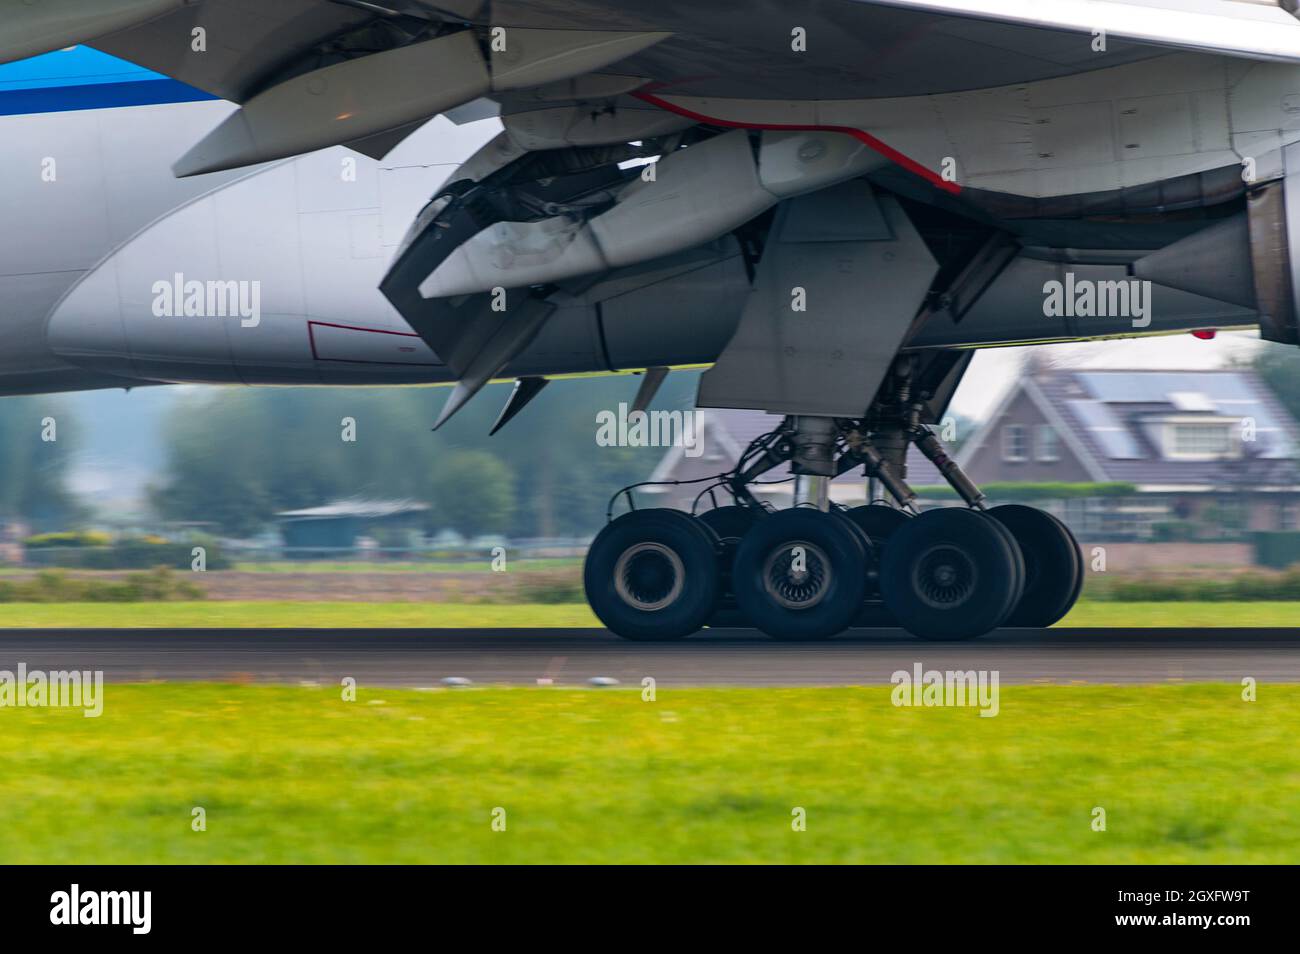 Passenger aircraft landing gear during landing Stock Photo